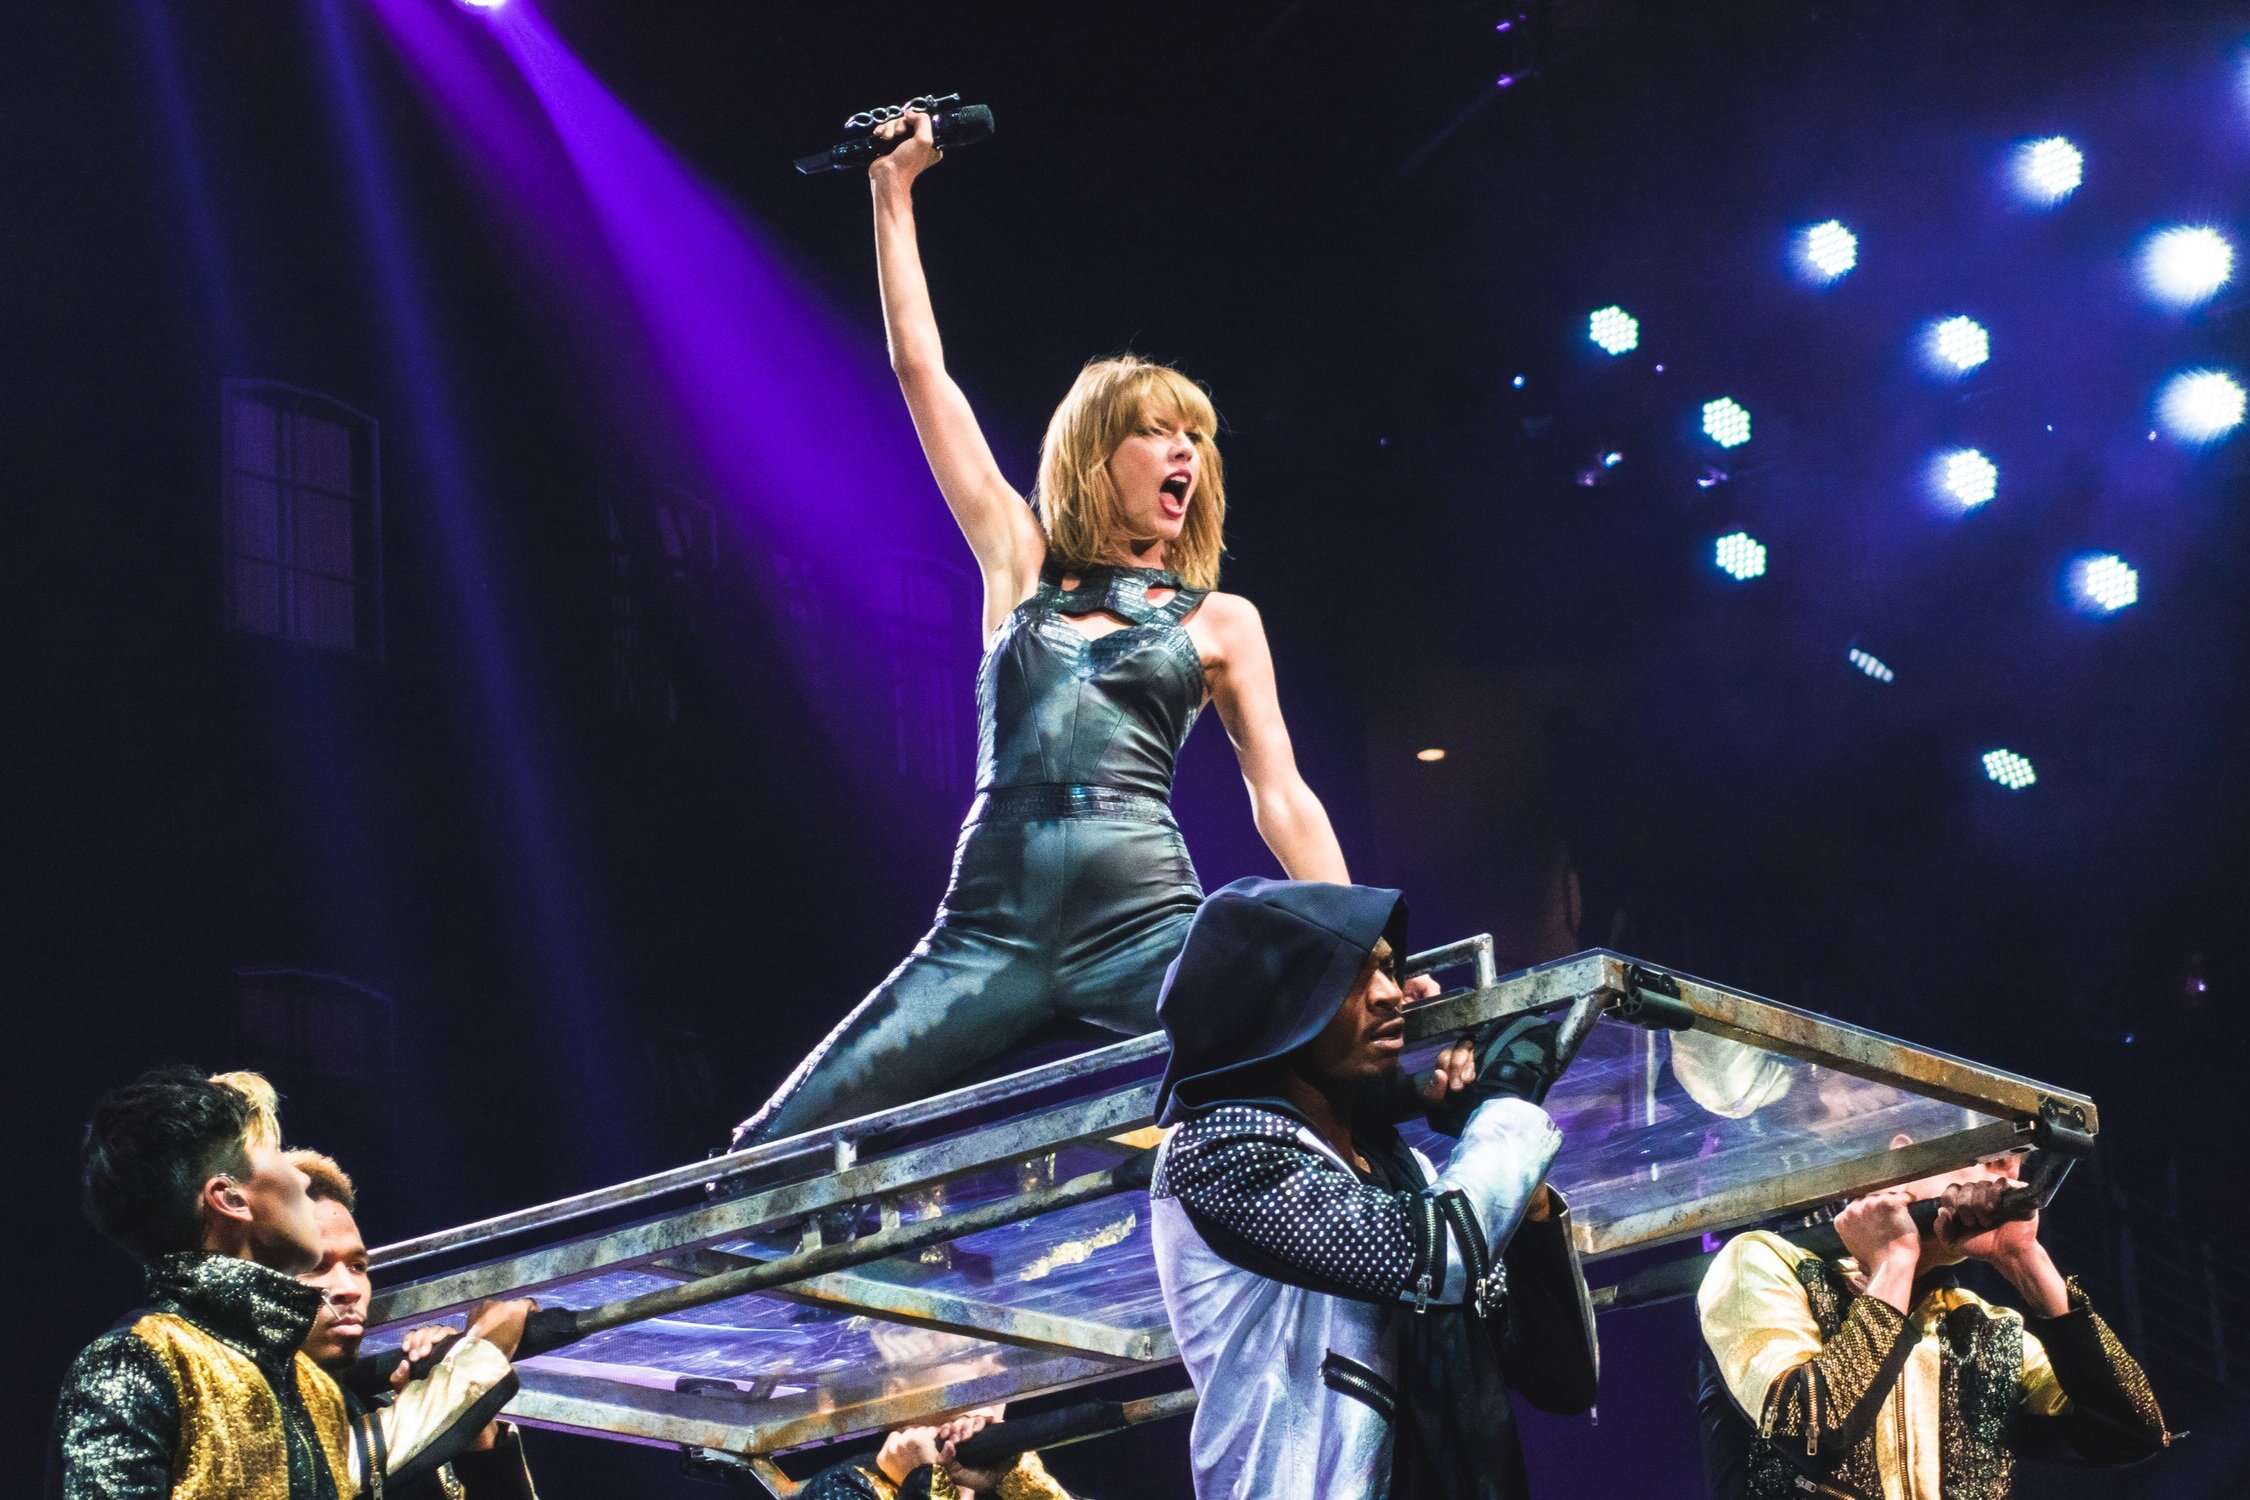 Taylor+Swift+1989+Tour+SLC+2015-01147+no+watermark.jpg